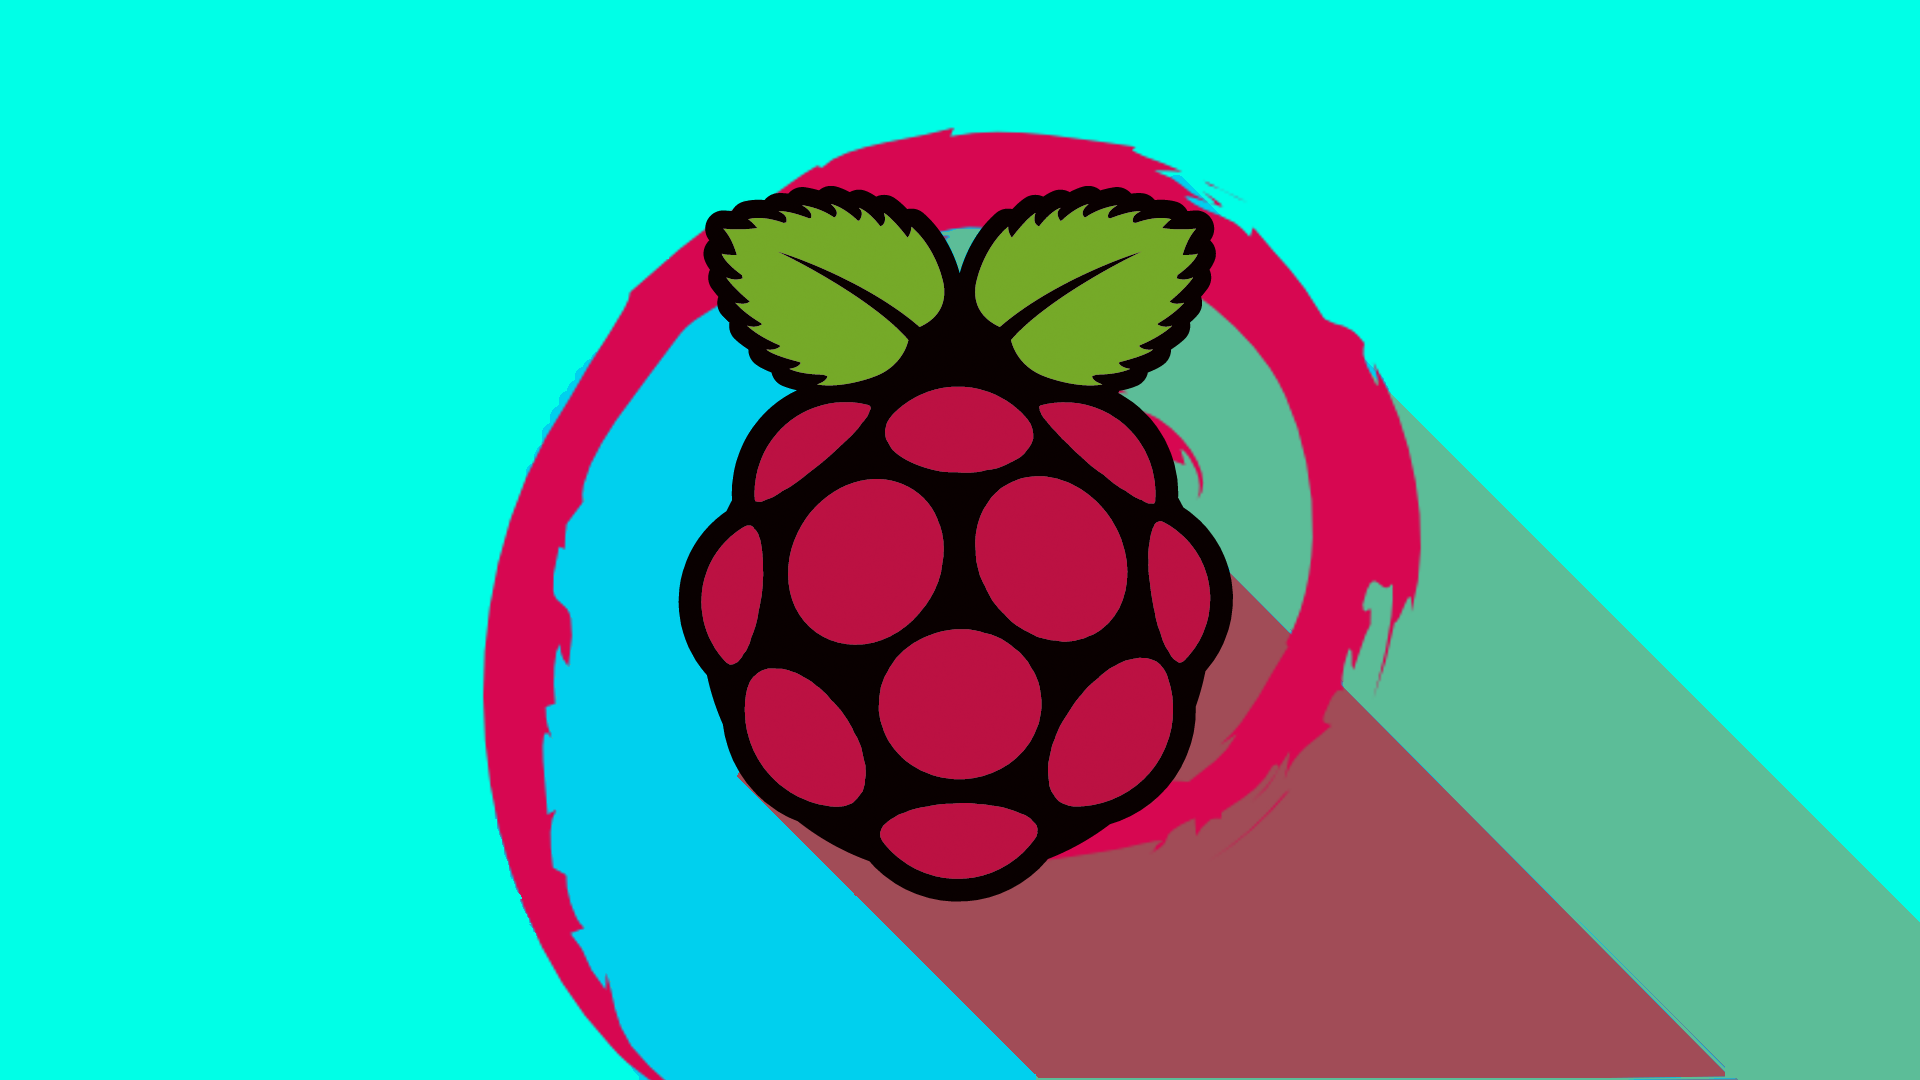 Raspberry Pi Wallpapers